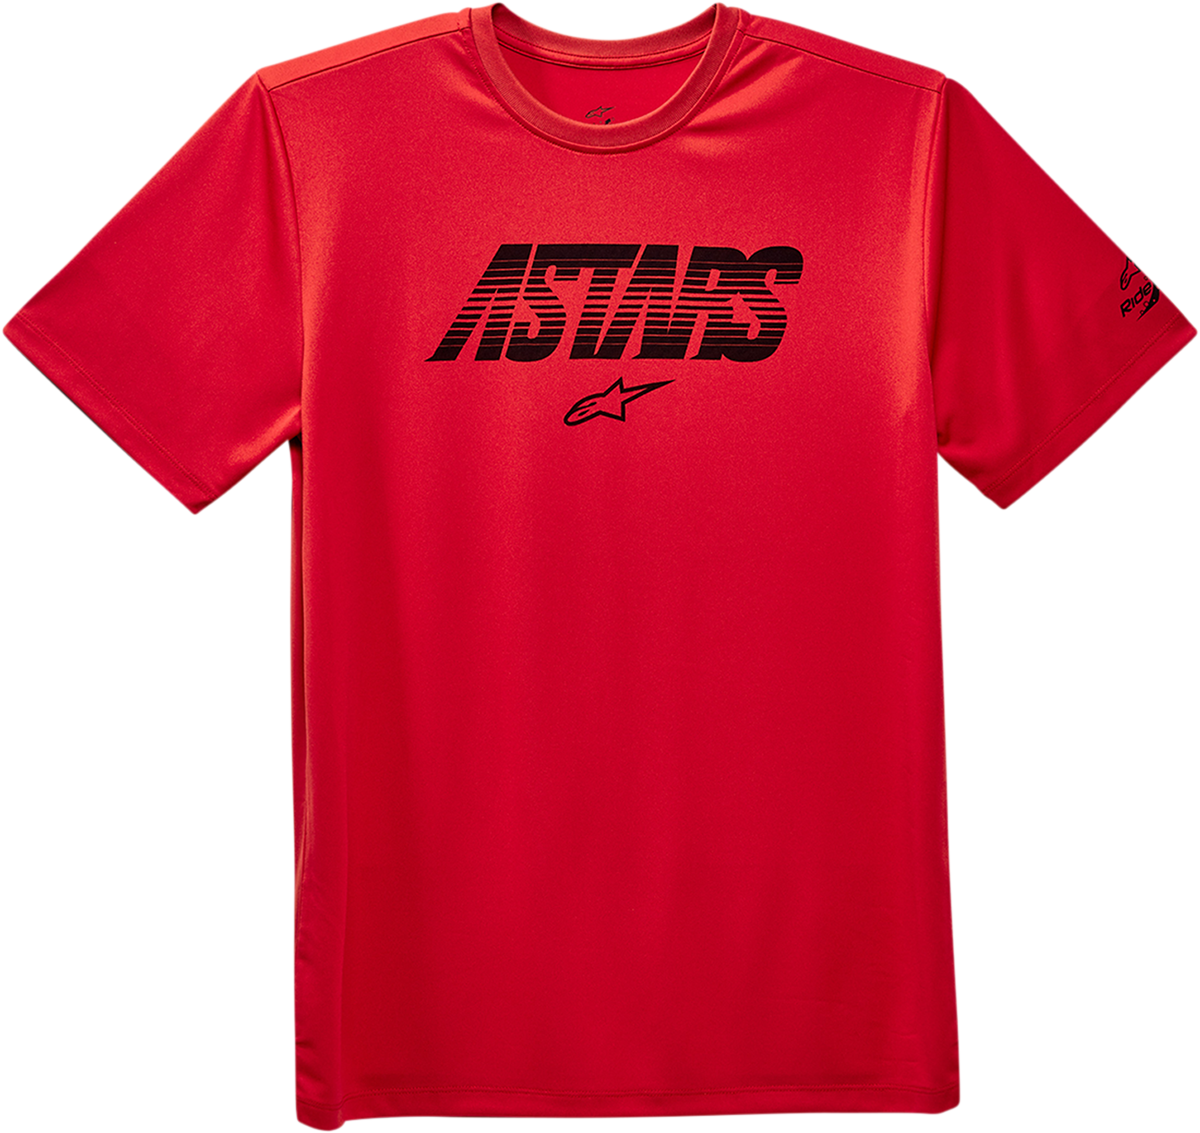 Tech Angle Premium T-Shirt - Red - Medium